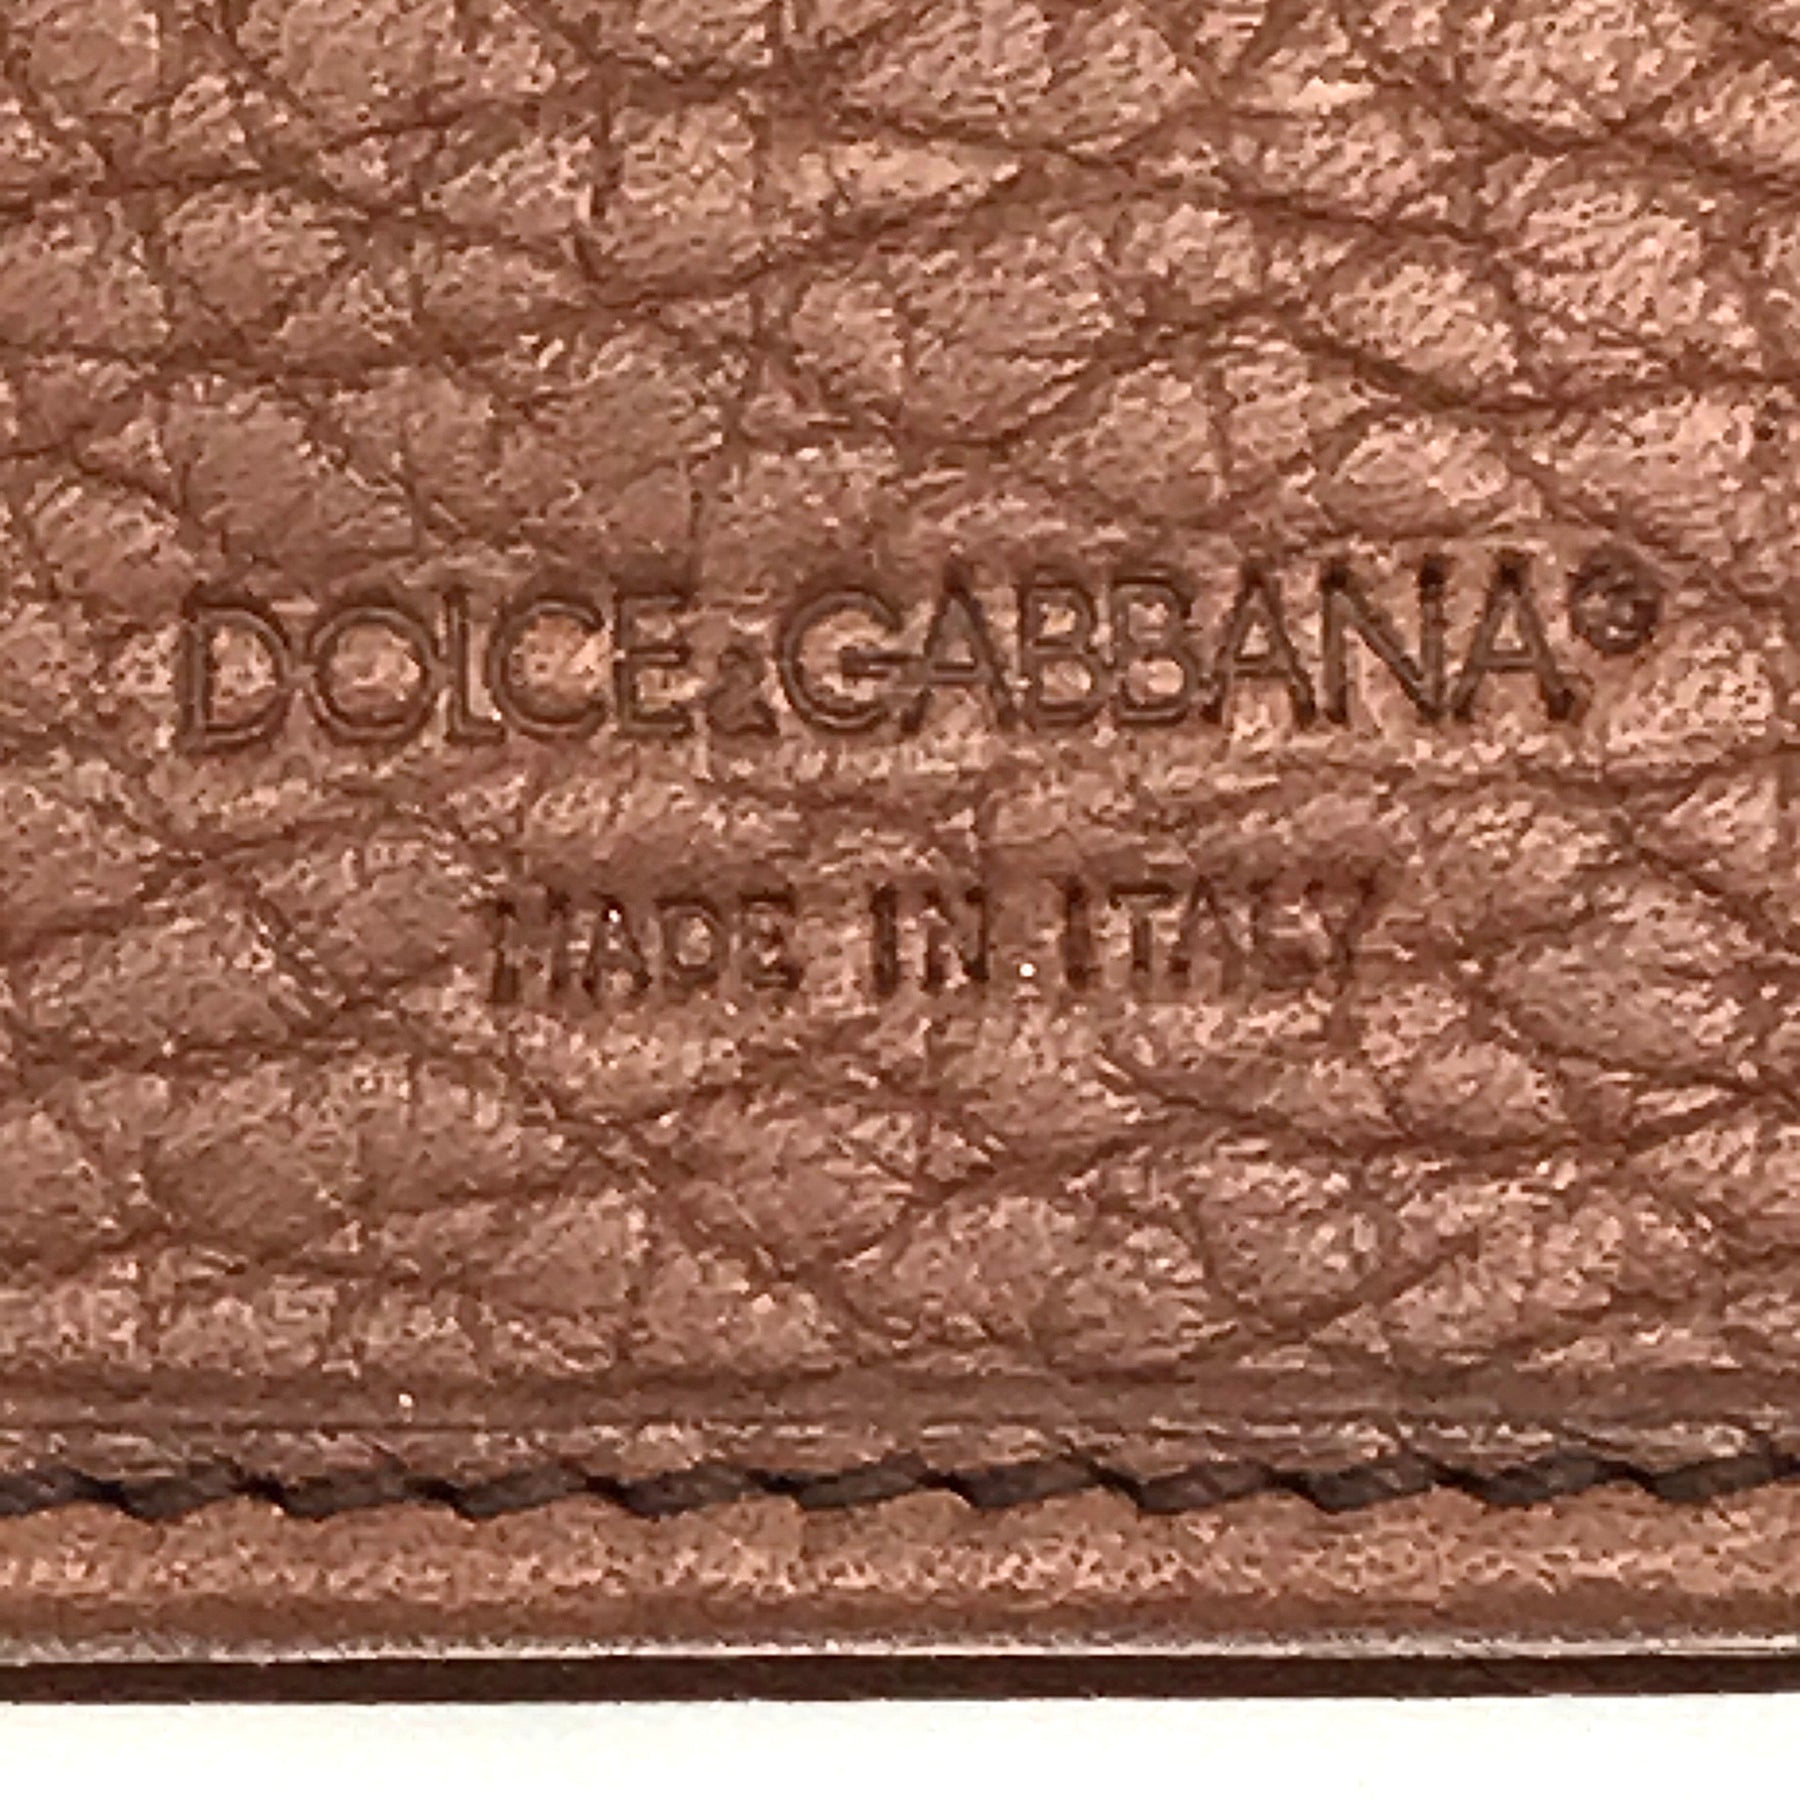 Black Dolce&Gabbana Horseshoe Leather Small Wallet – Designer Revival